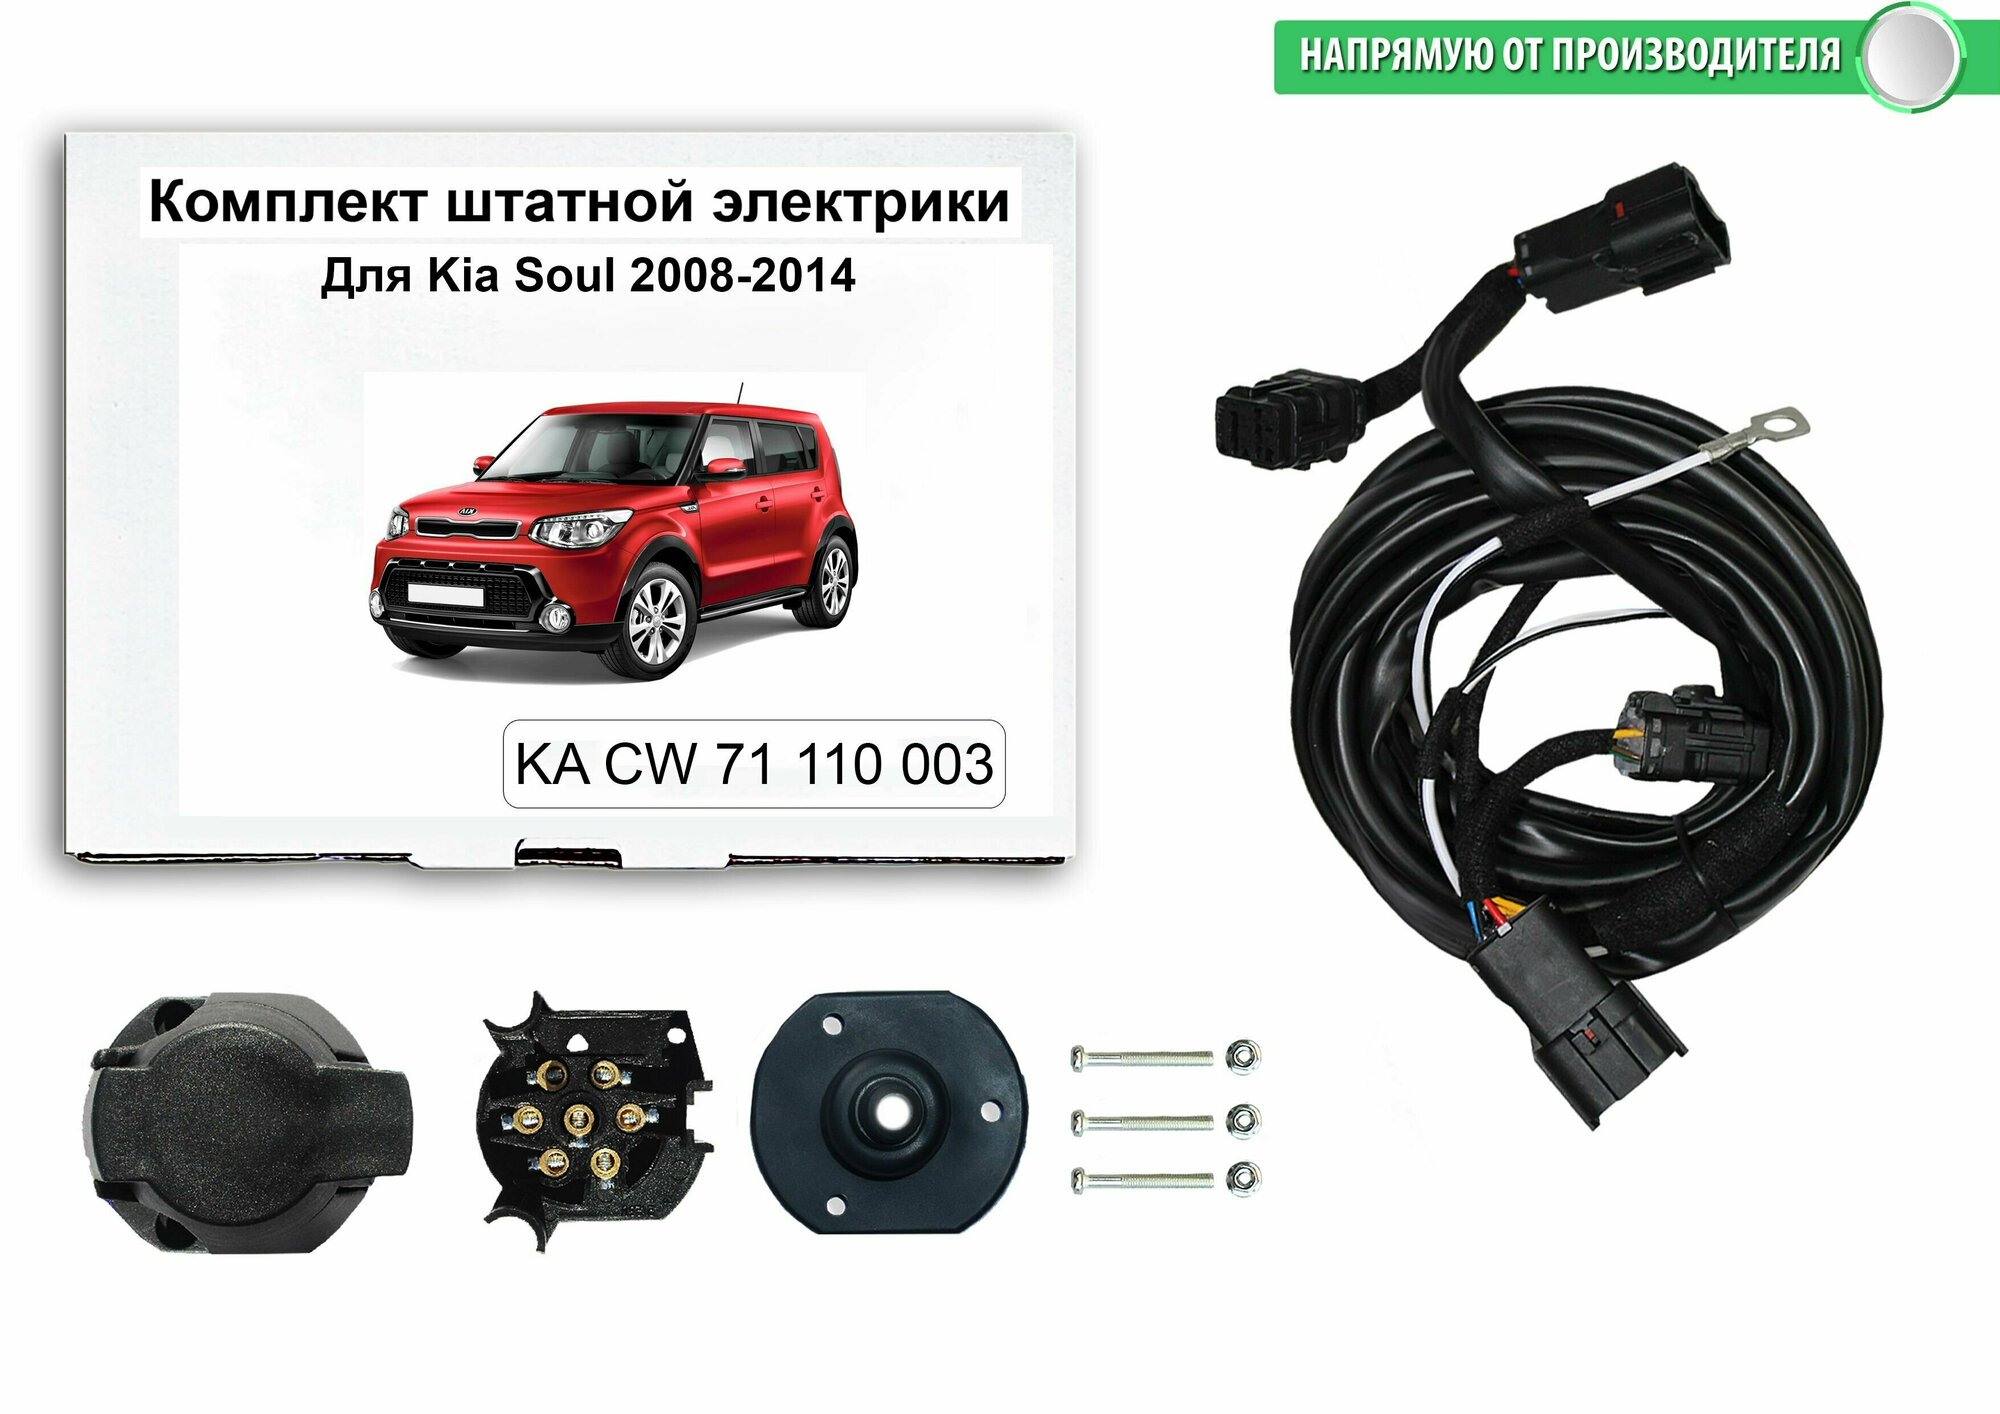 Комплект электропроводки для фаркопа Kia Soul 2008-2014 гг со штатными колодками